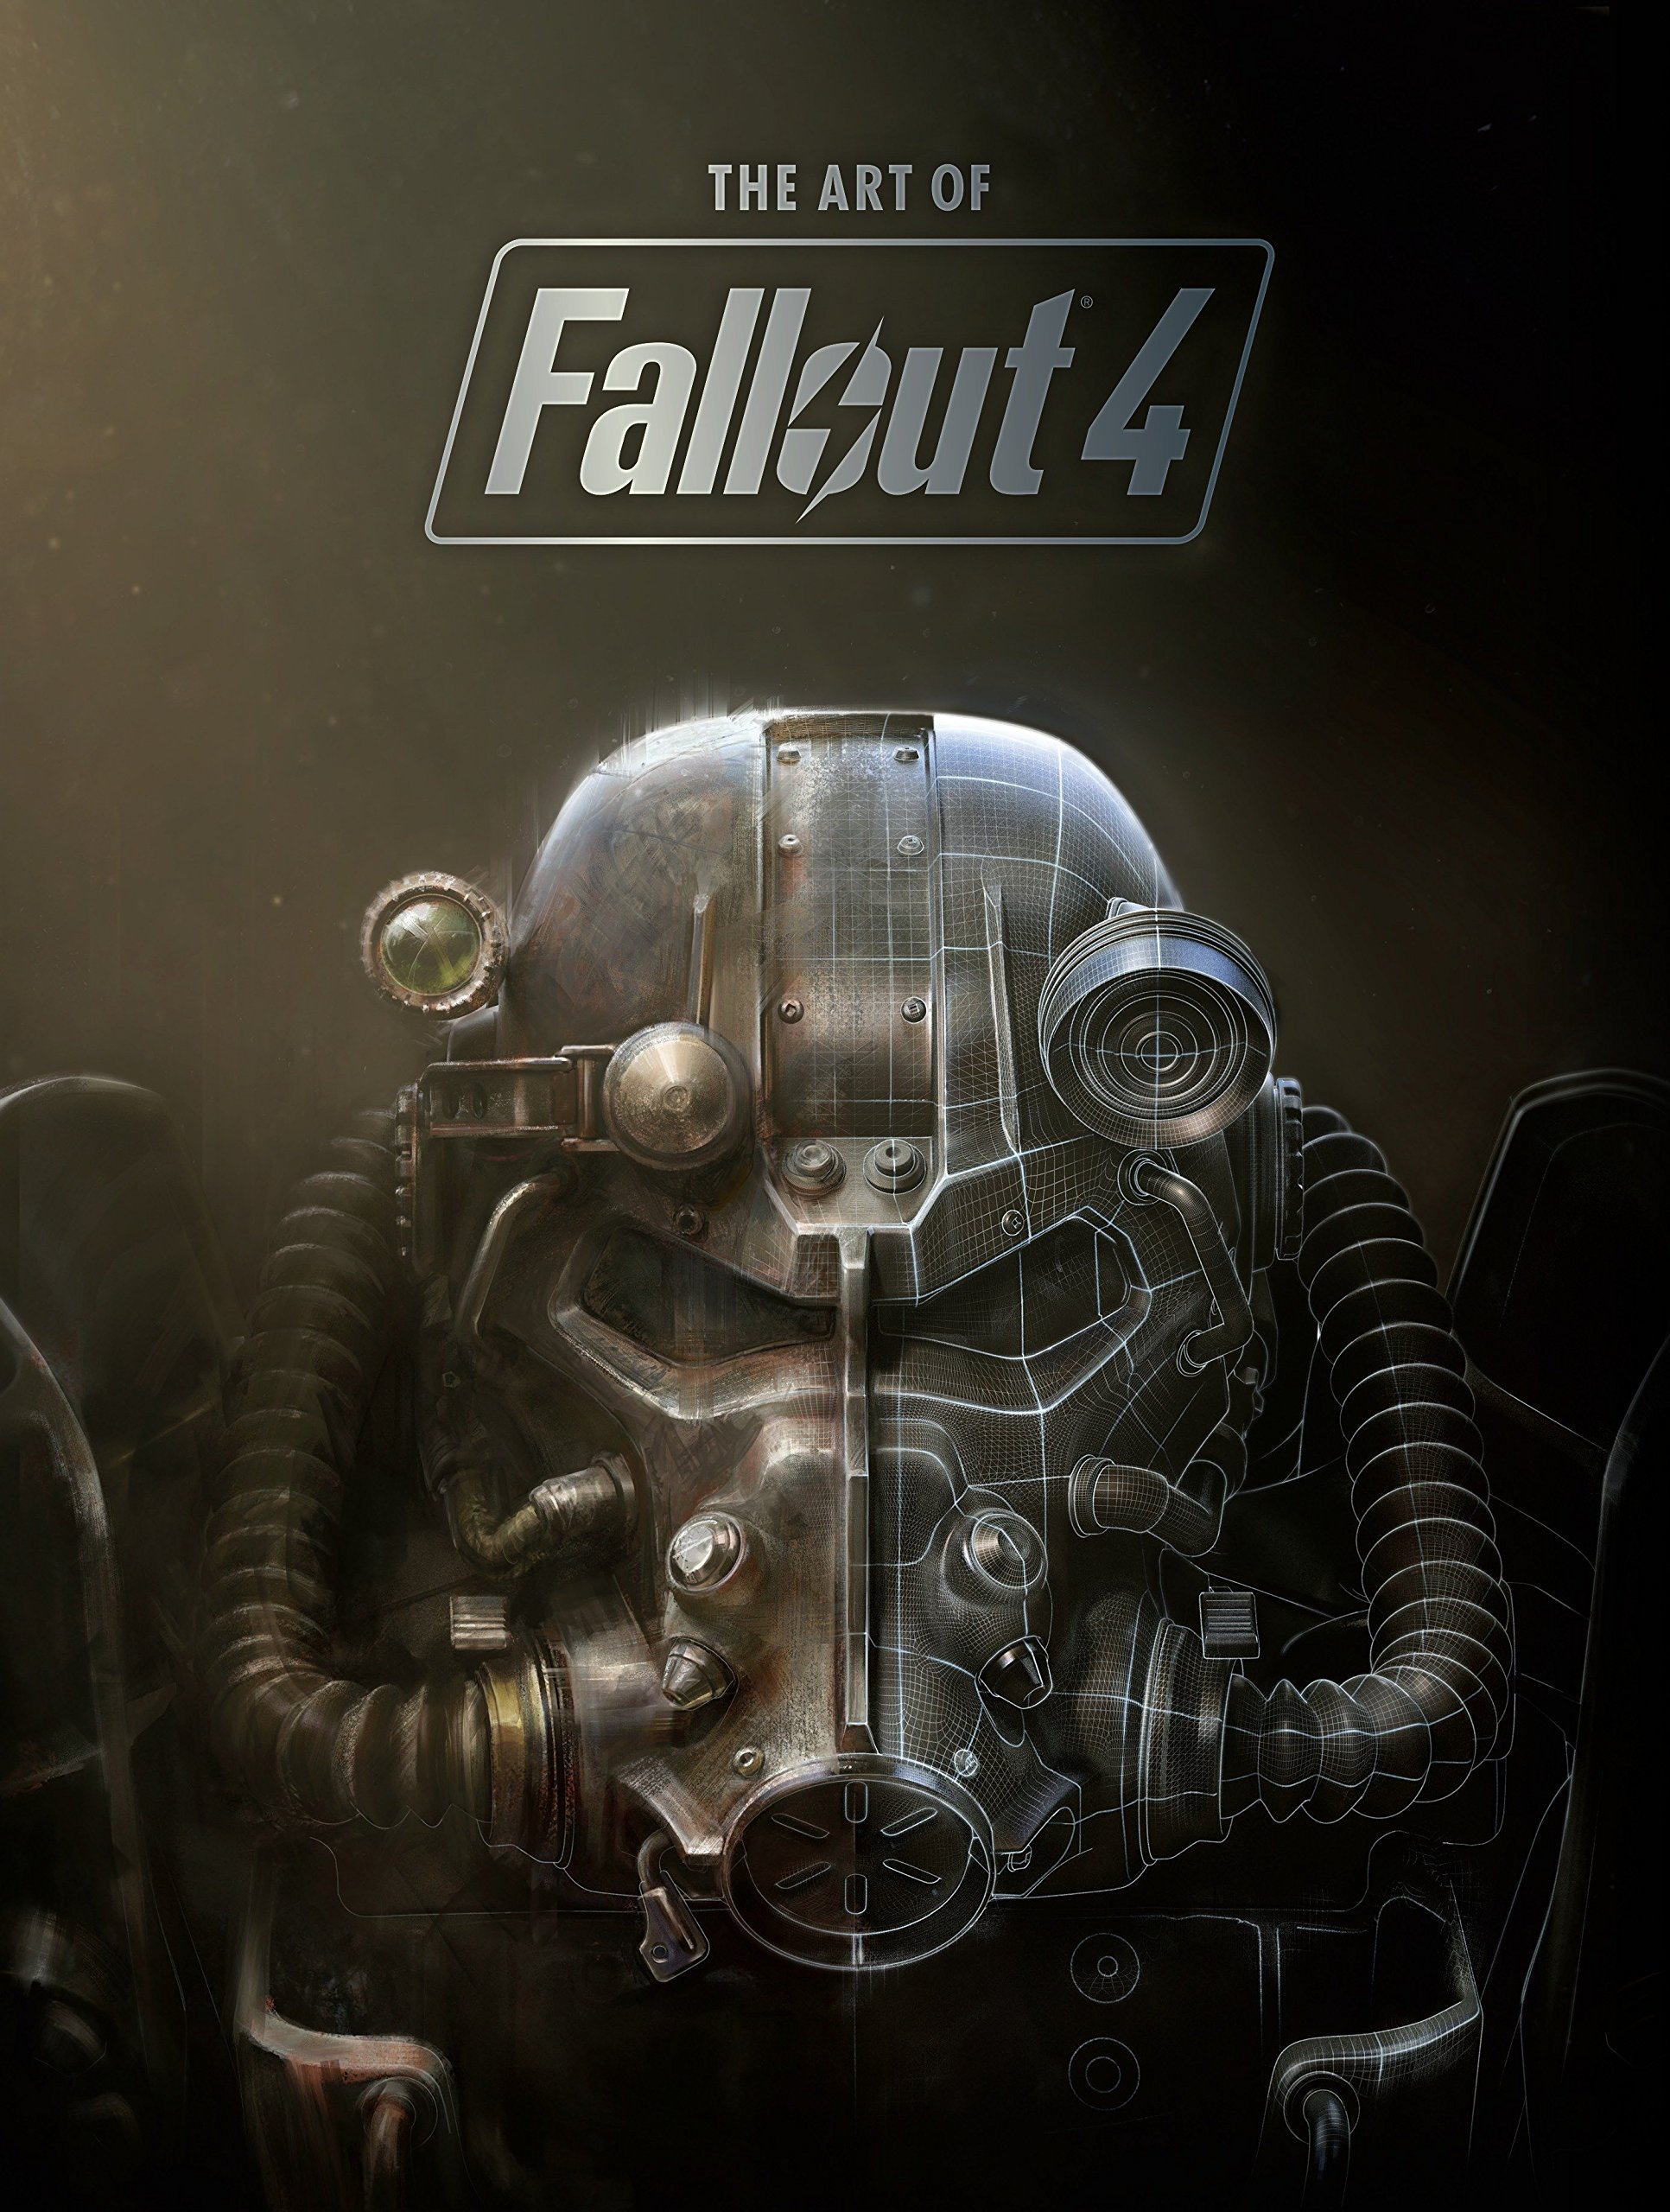 Fallout 4 game windowed mode option.